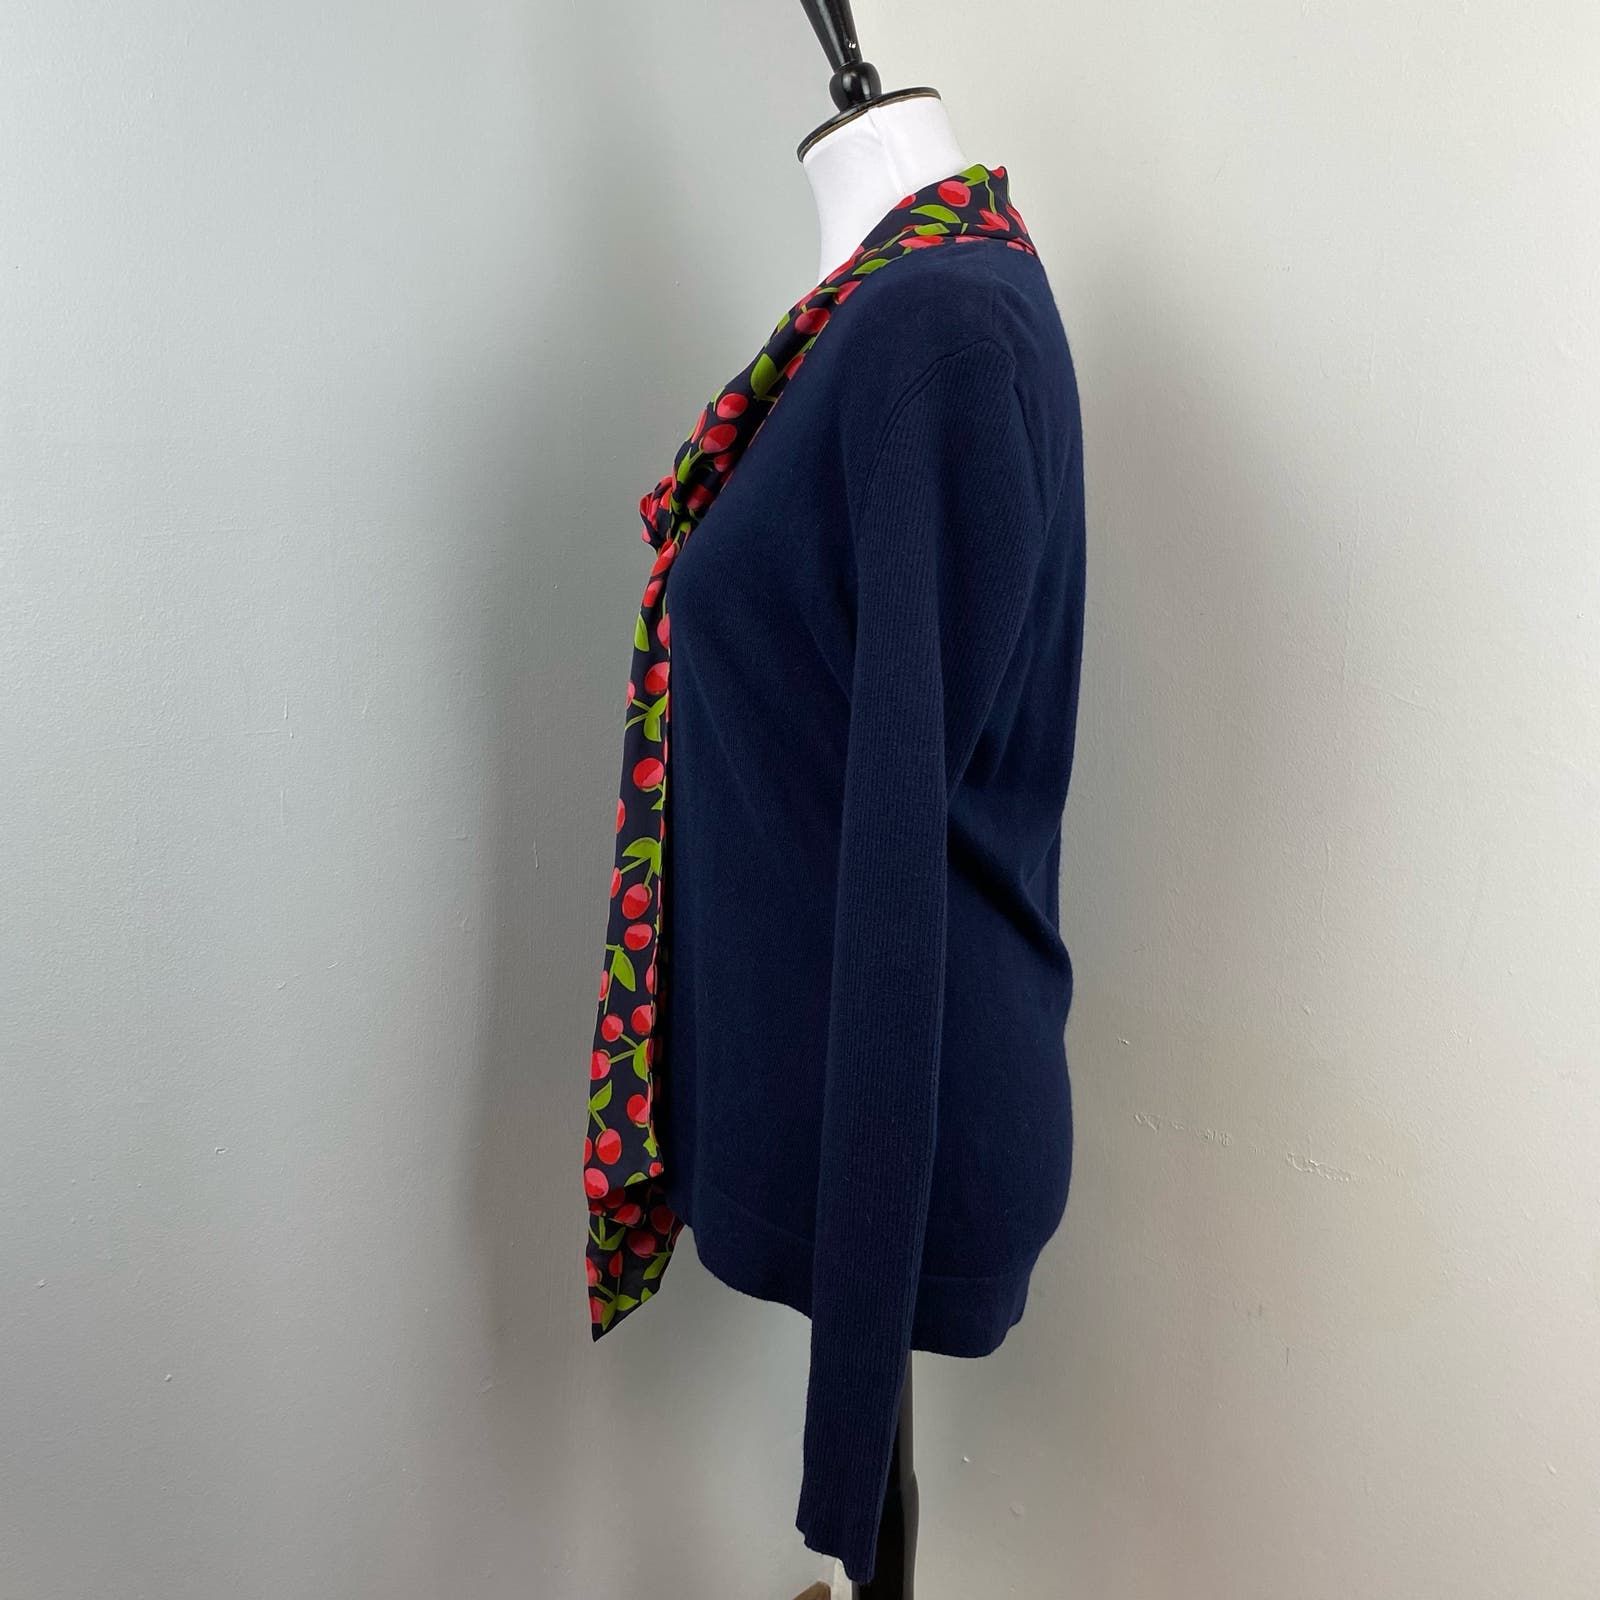 Tory Burch Tory Burch Navy Cashmere Silk Cherry Print Neck Tie Sweater Size L / US 10 / IT 46 - 6 Thumbnail